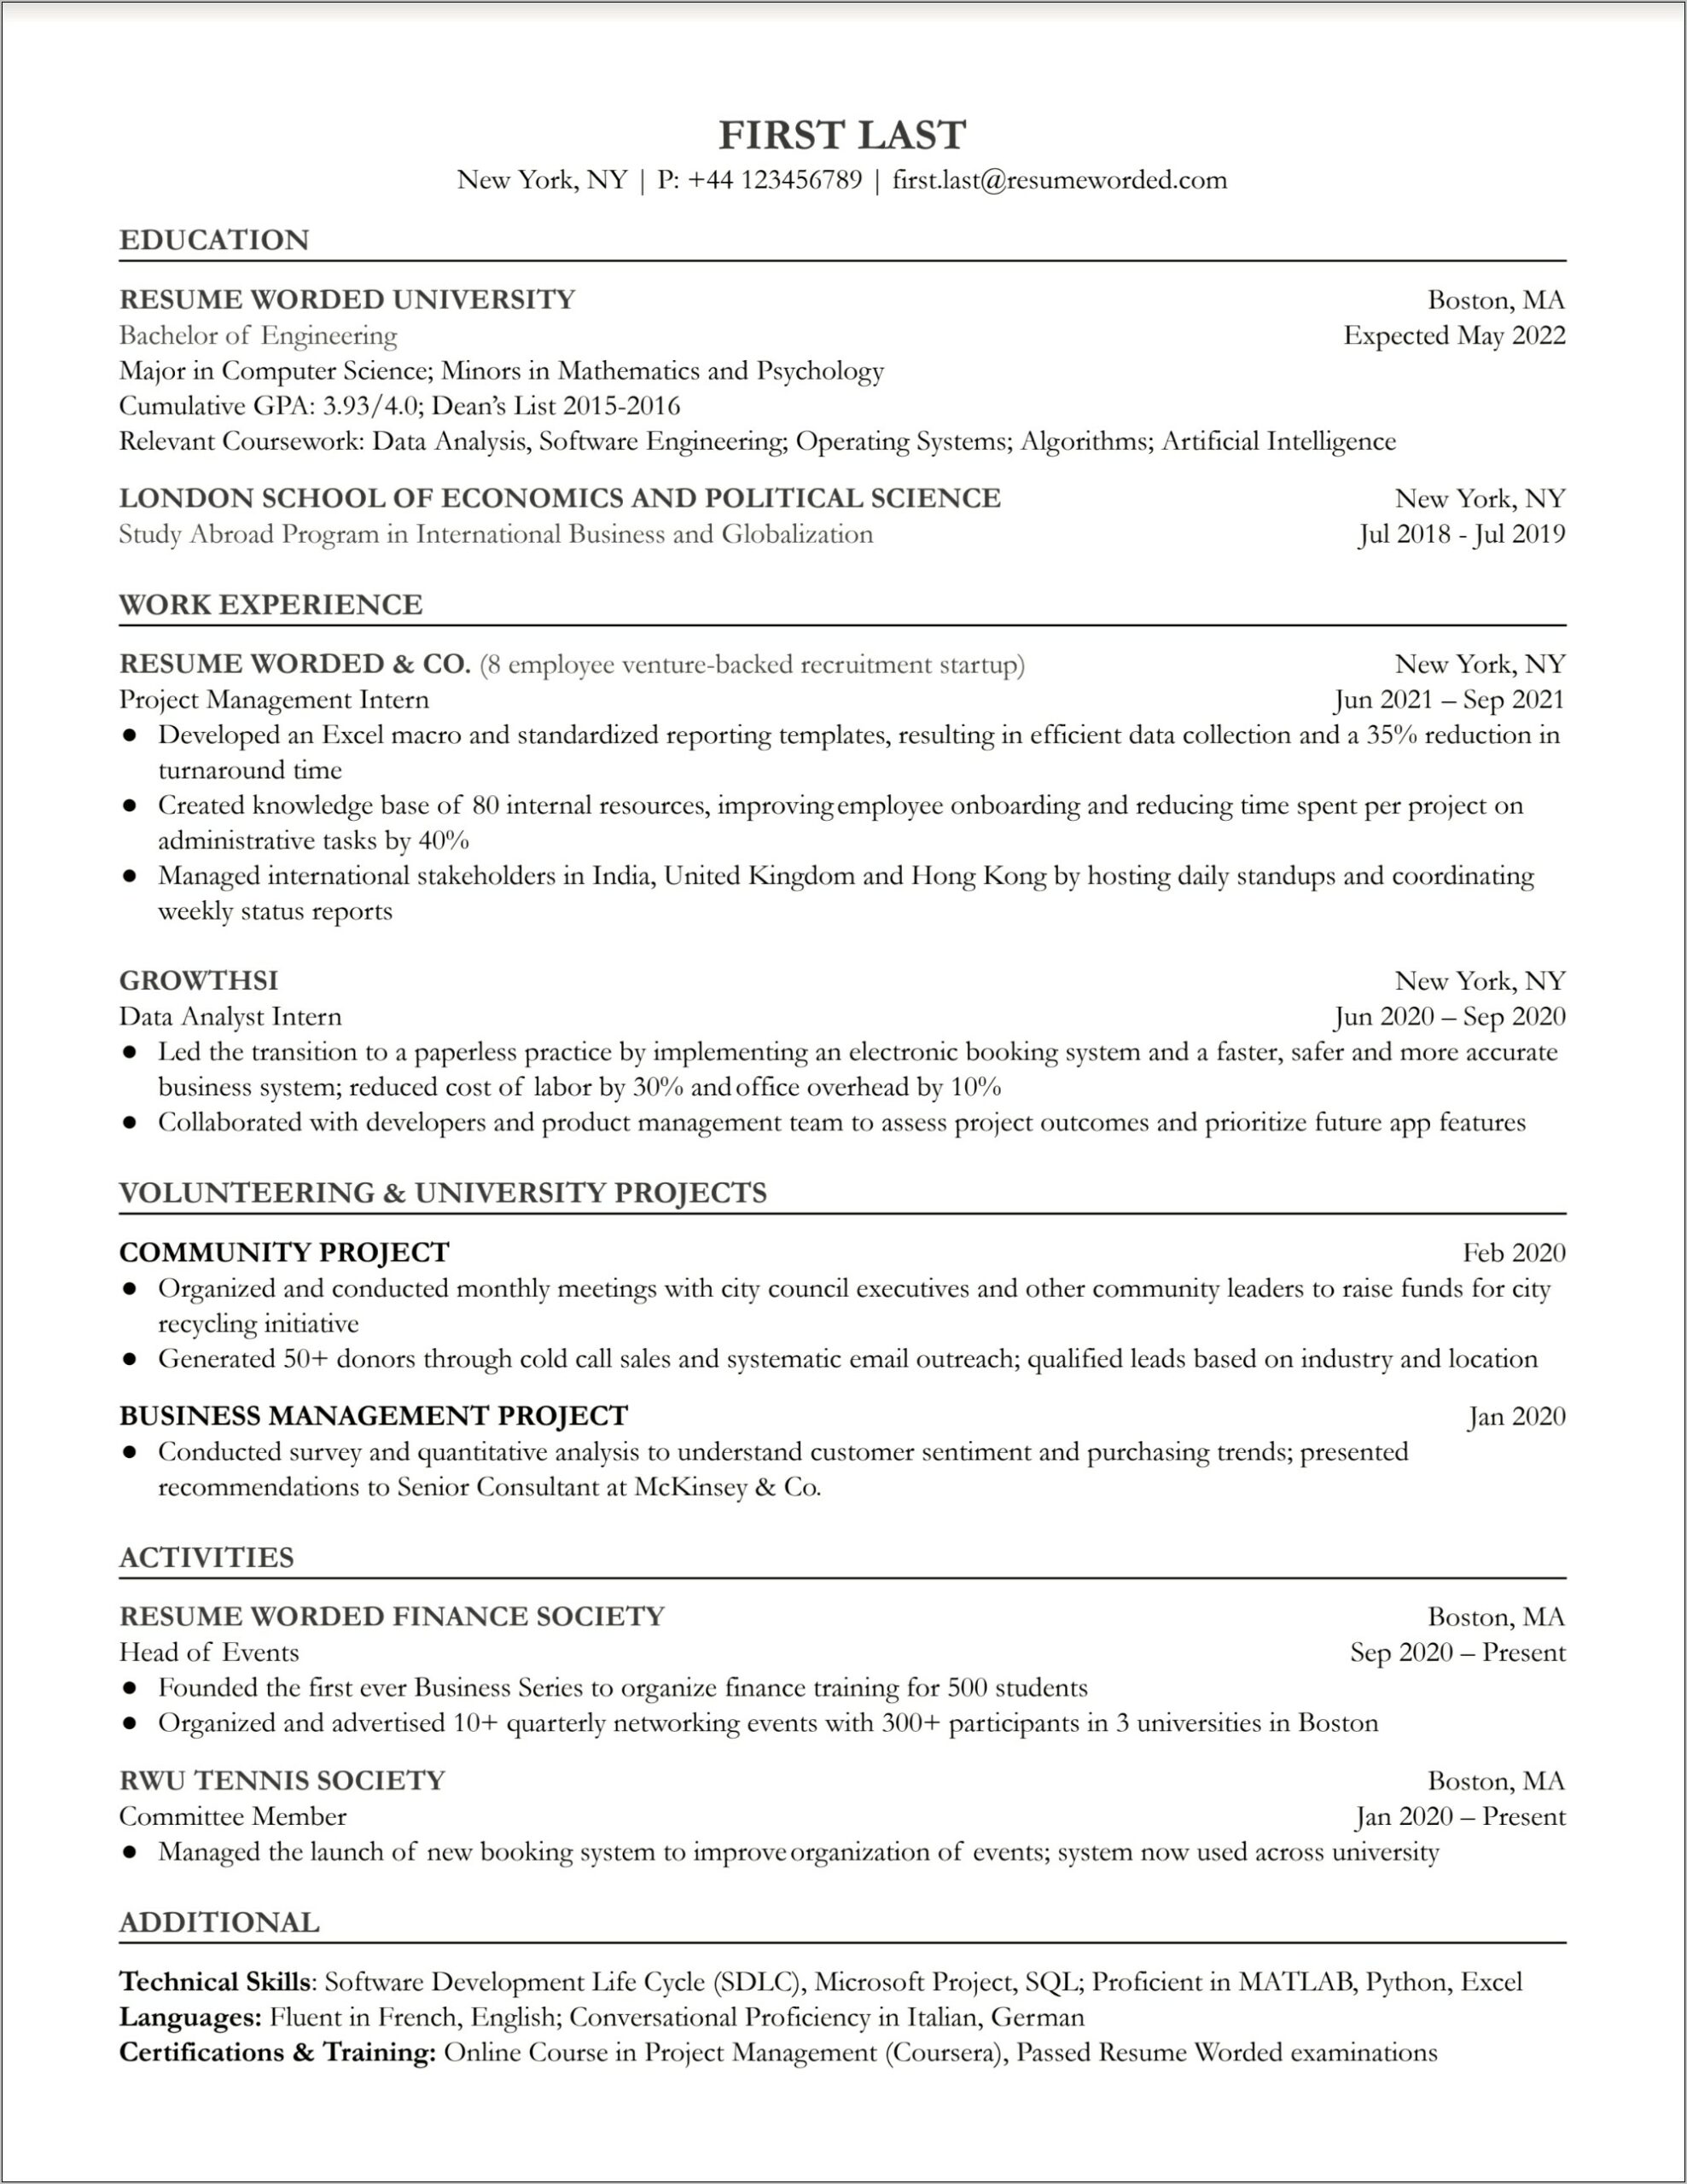 Resume Skills For Entry Level Position